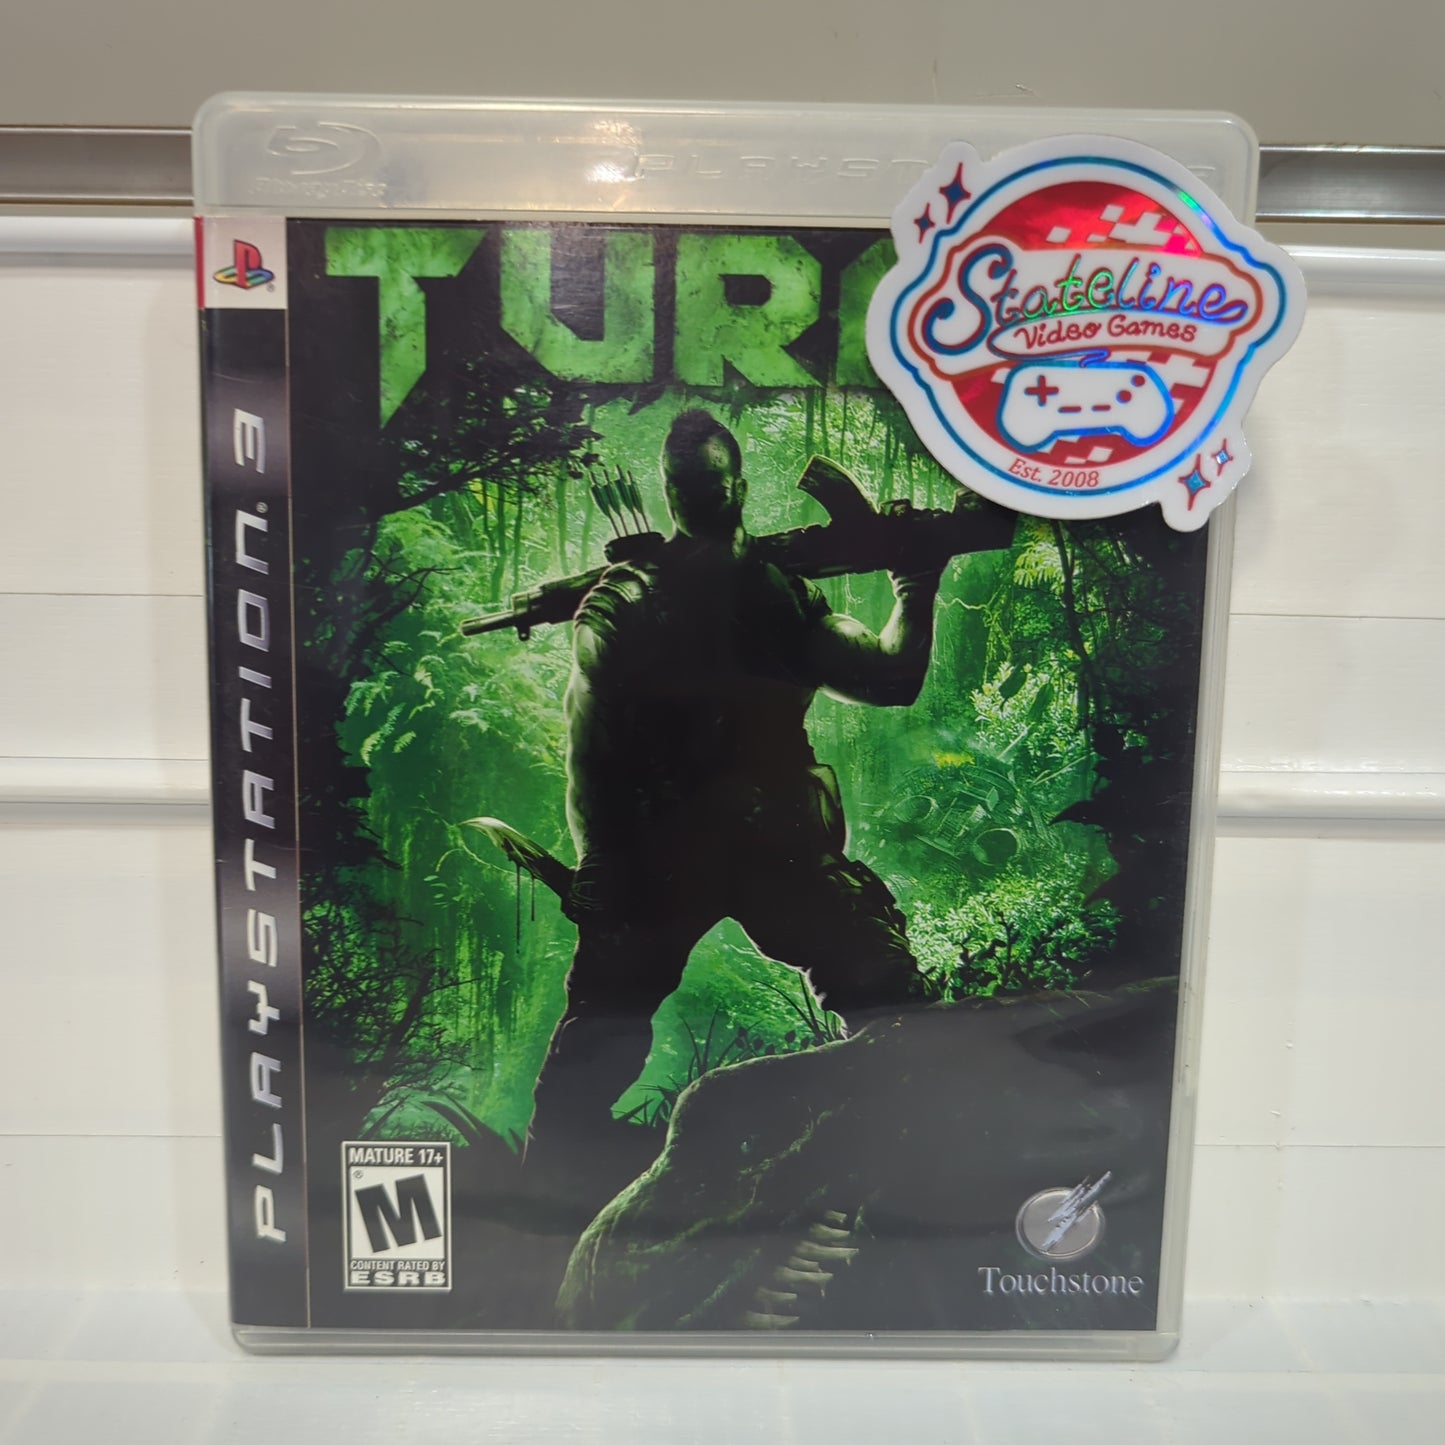 Turok - Playstation 3